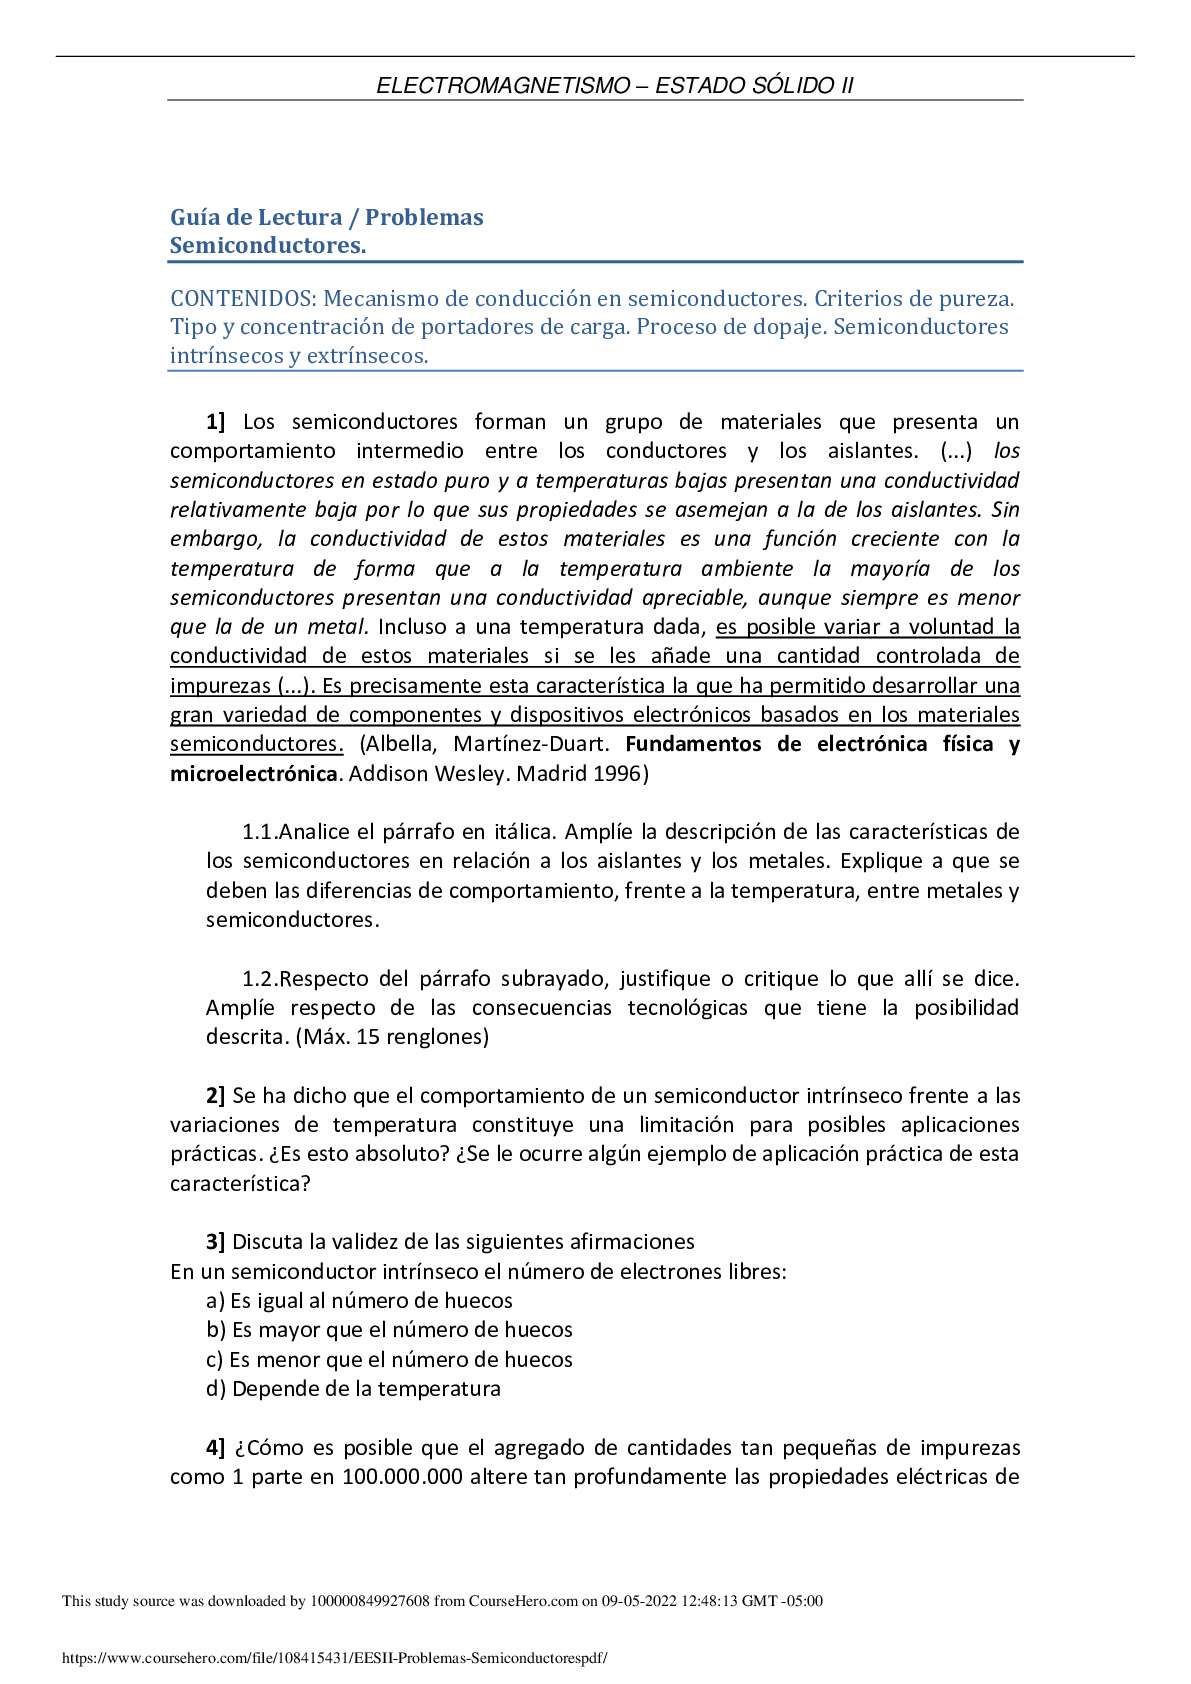 EESII_Problemas_Semiconductores.pdf